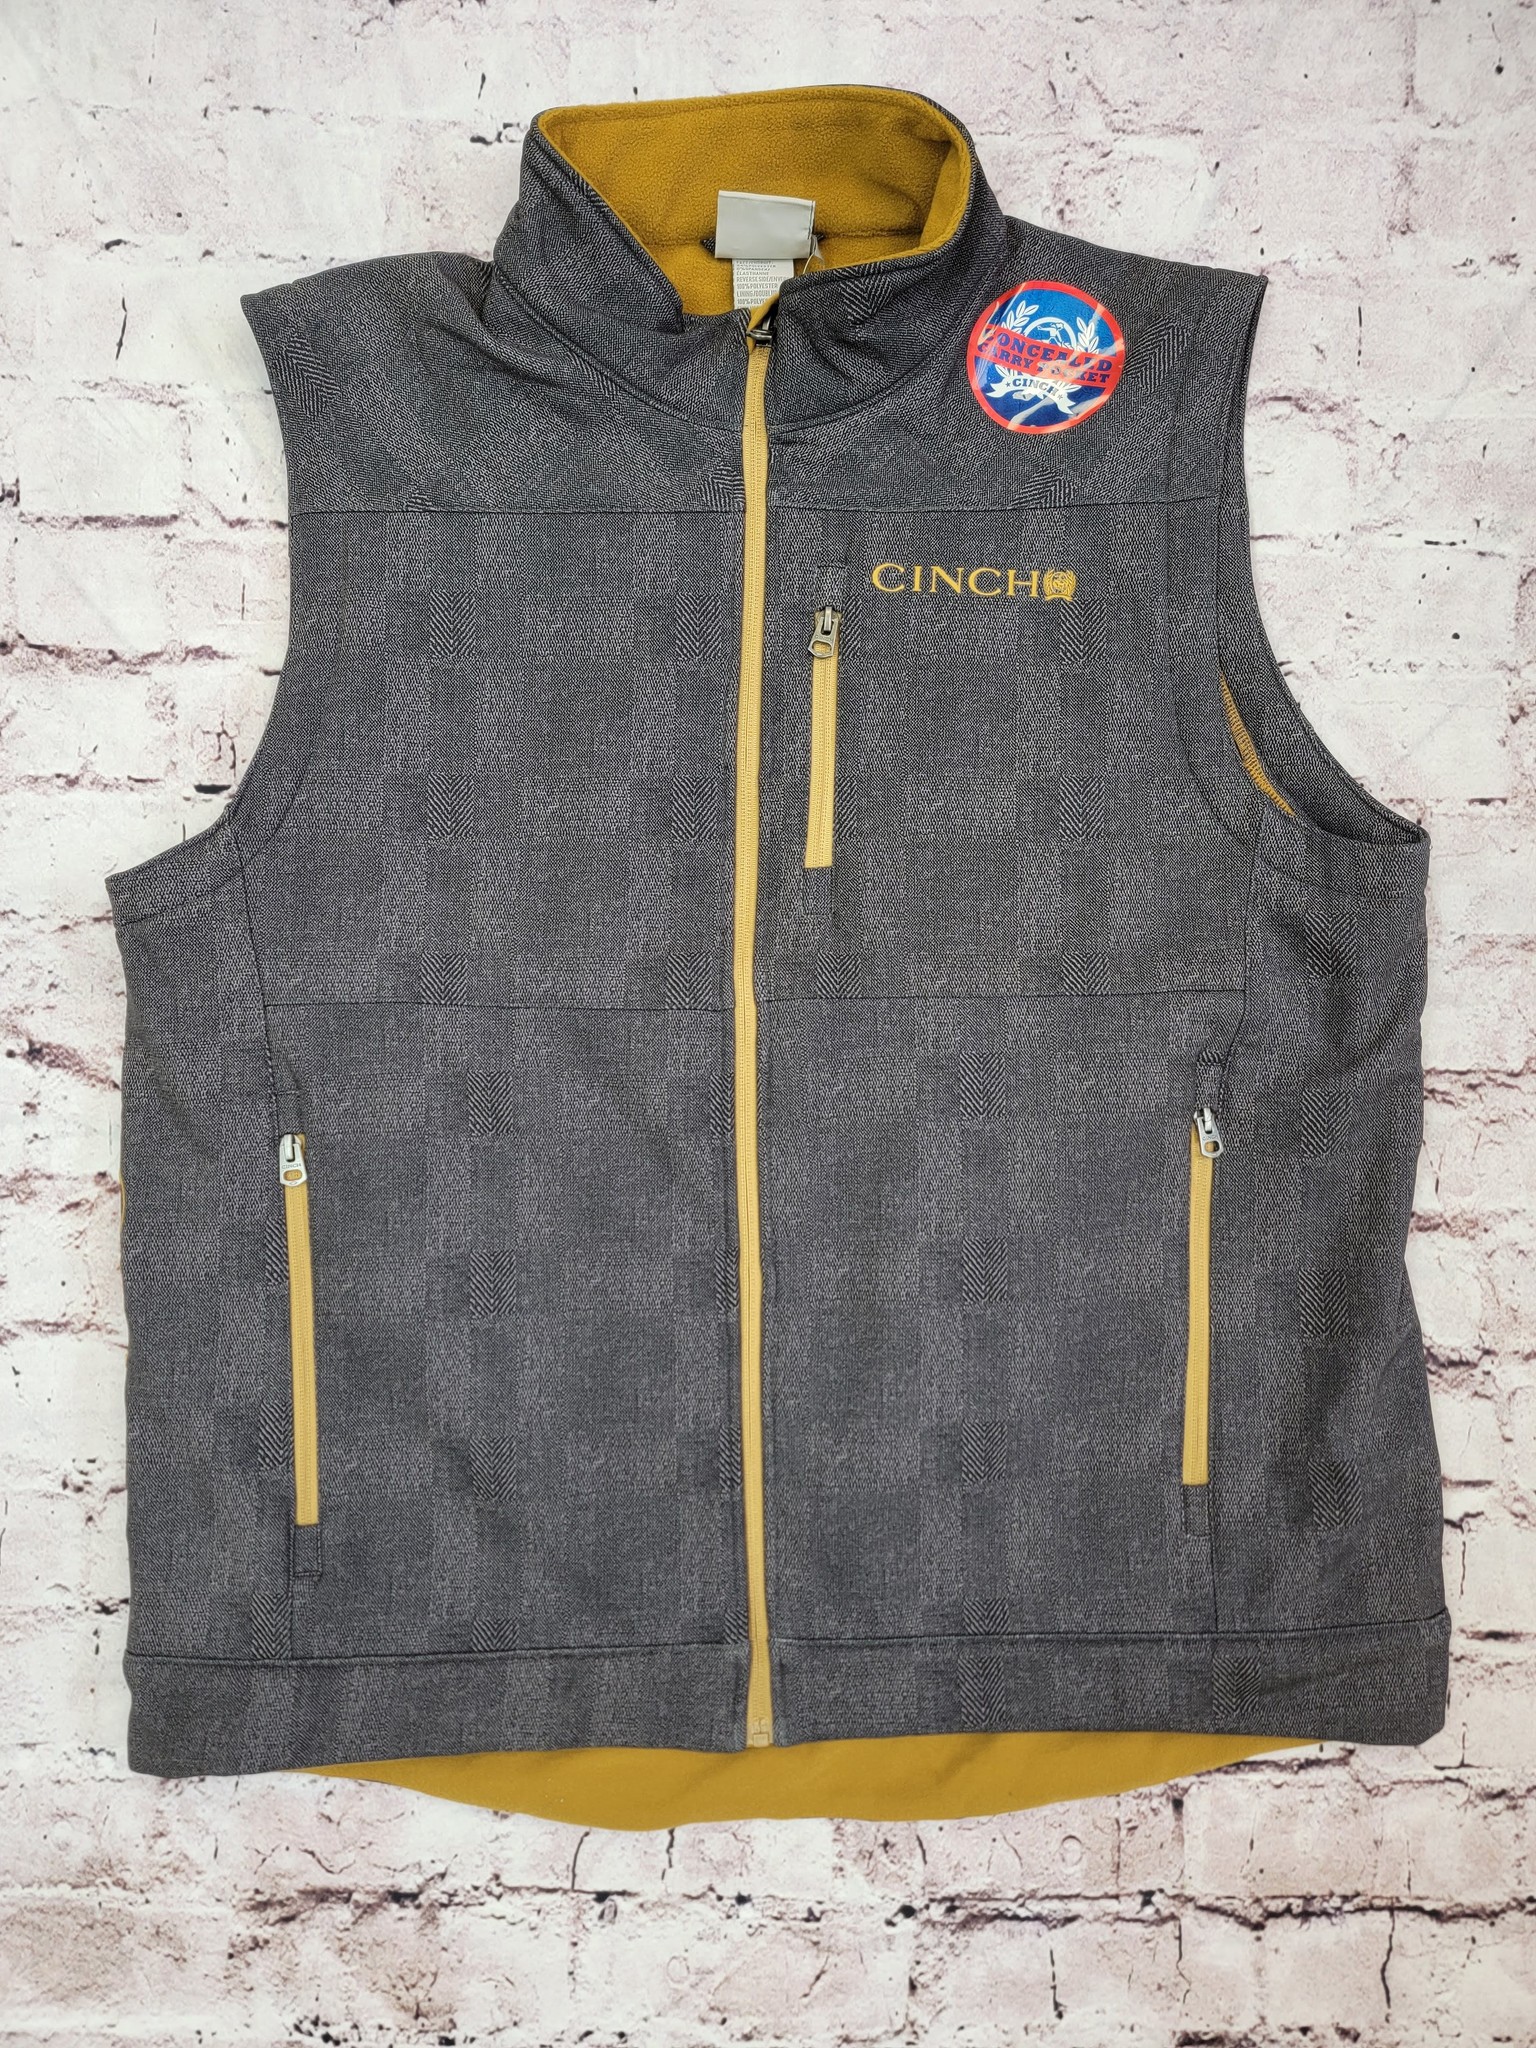 Men's Cinch Charcoal Concealed Carry Vest